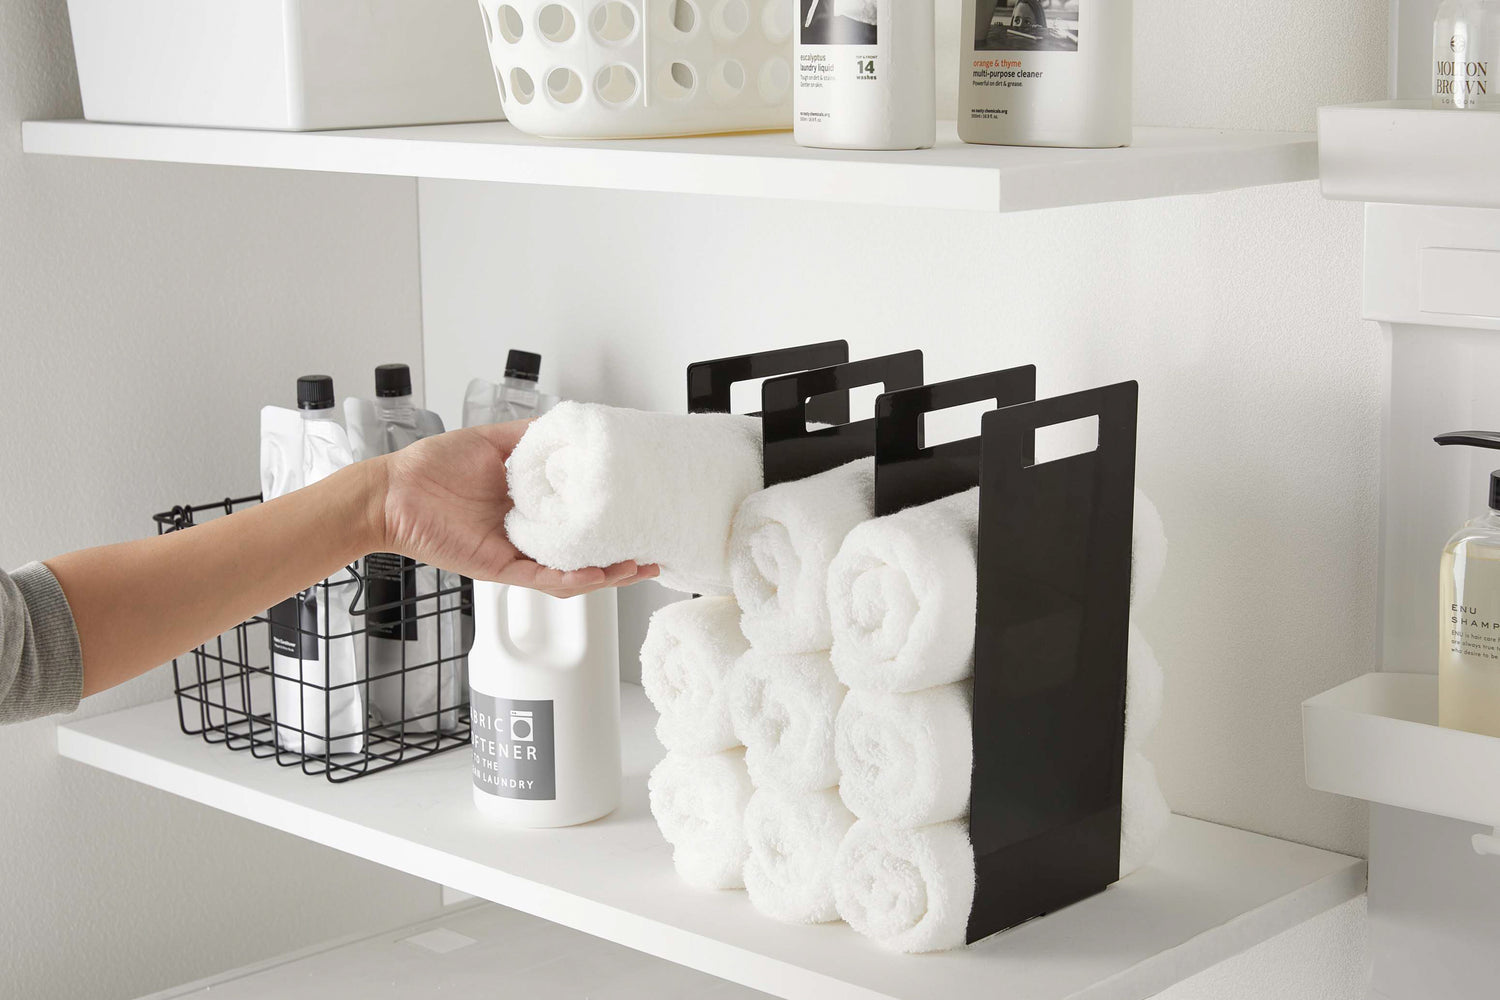 View 11 - Black Towel Storage Organizer displaying towels in laundry room by Yamazaki Home.